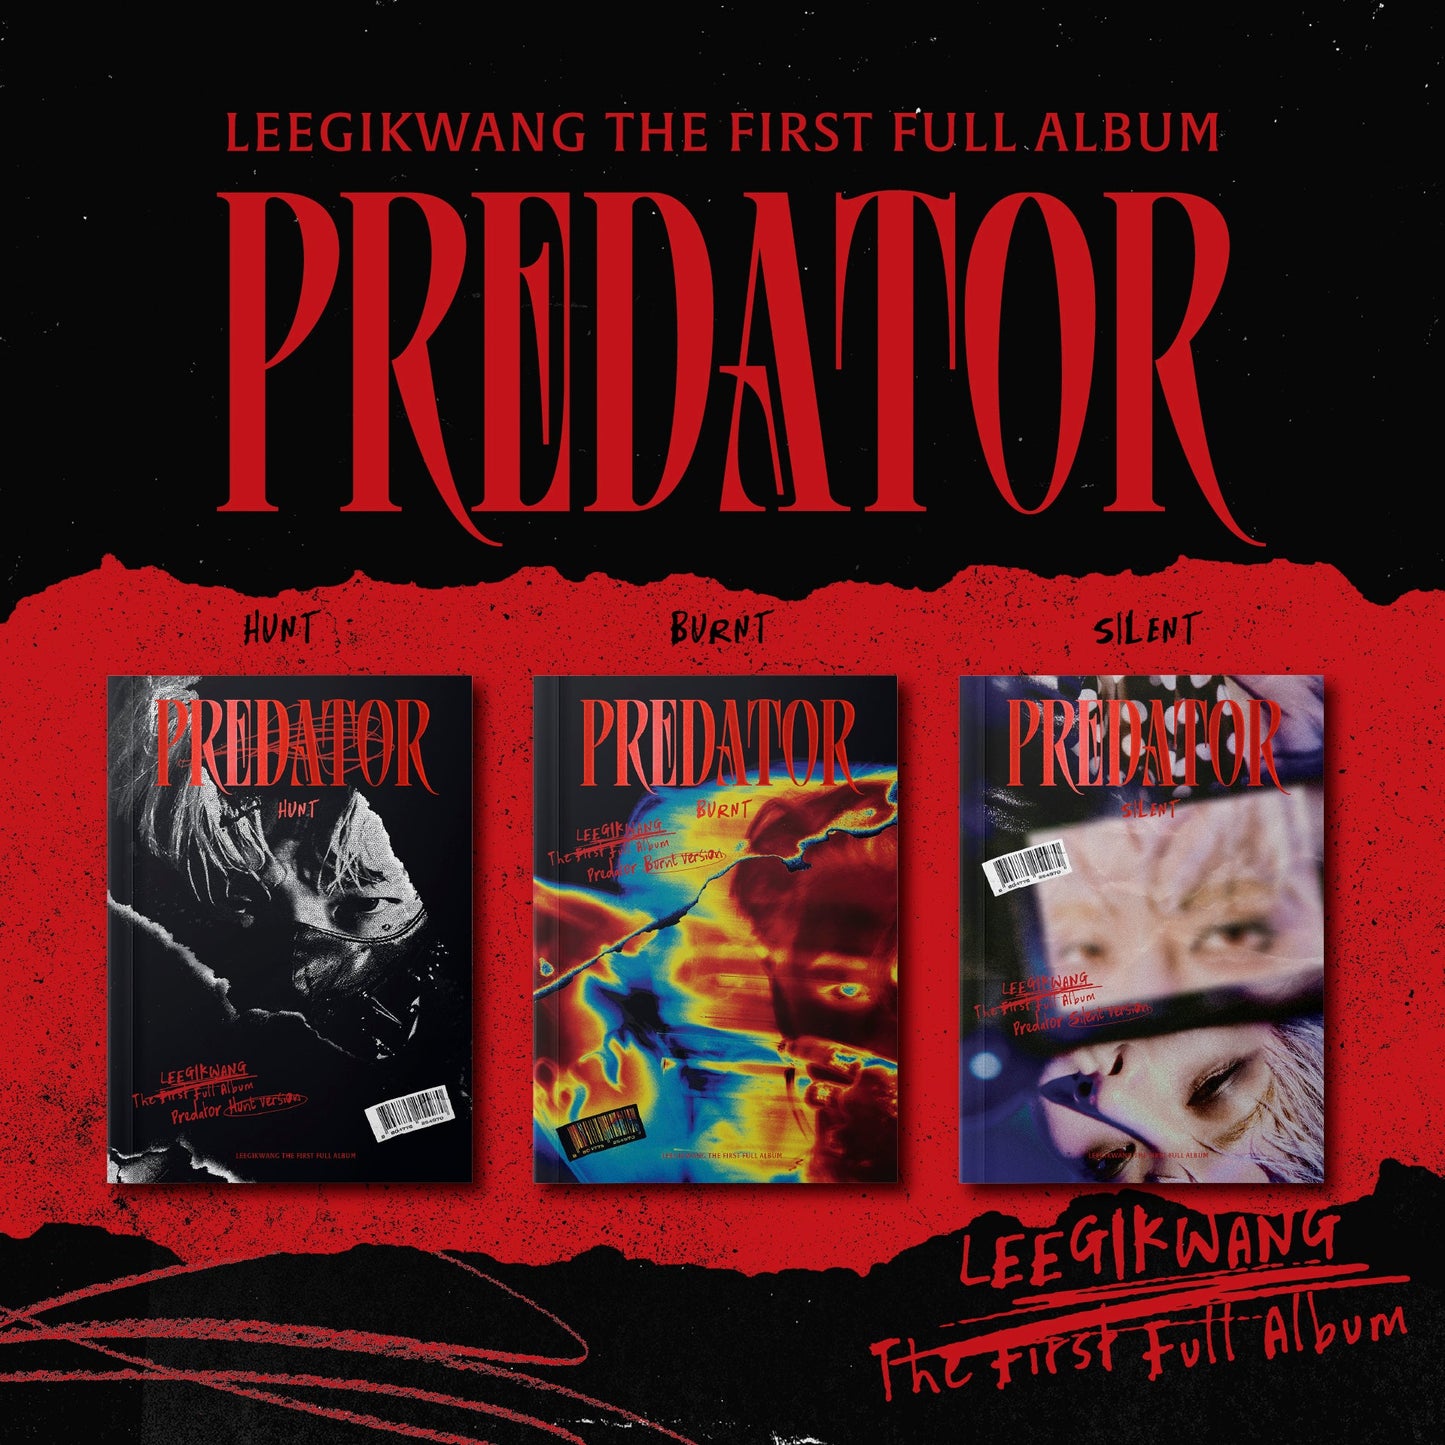 LEE GIKWANG 1ST ALBUM 'PREDATOR' COVER